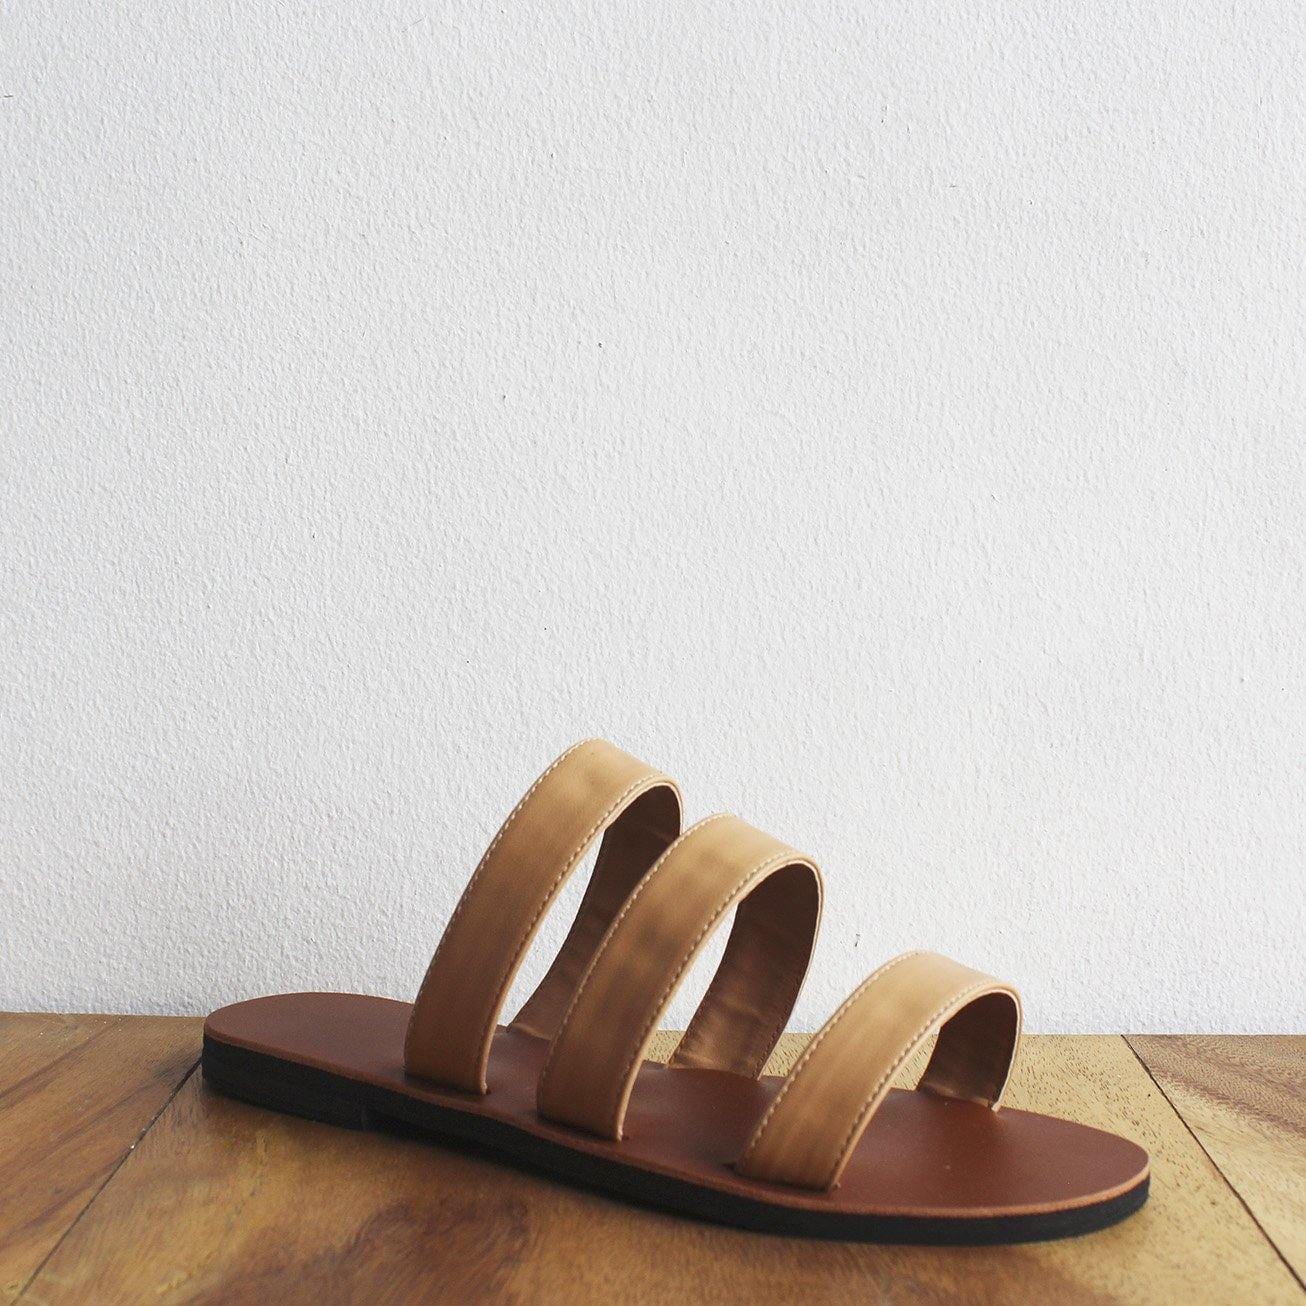 3-strap sandals